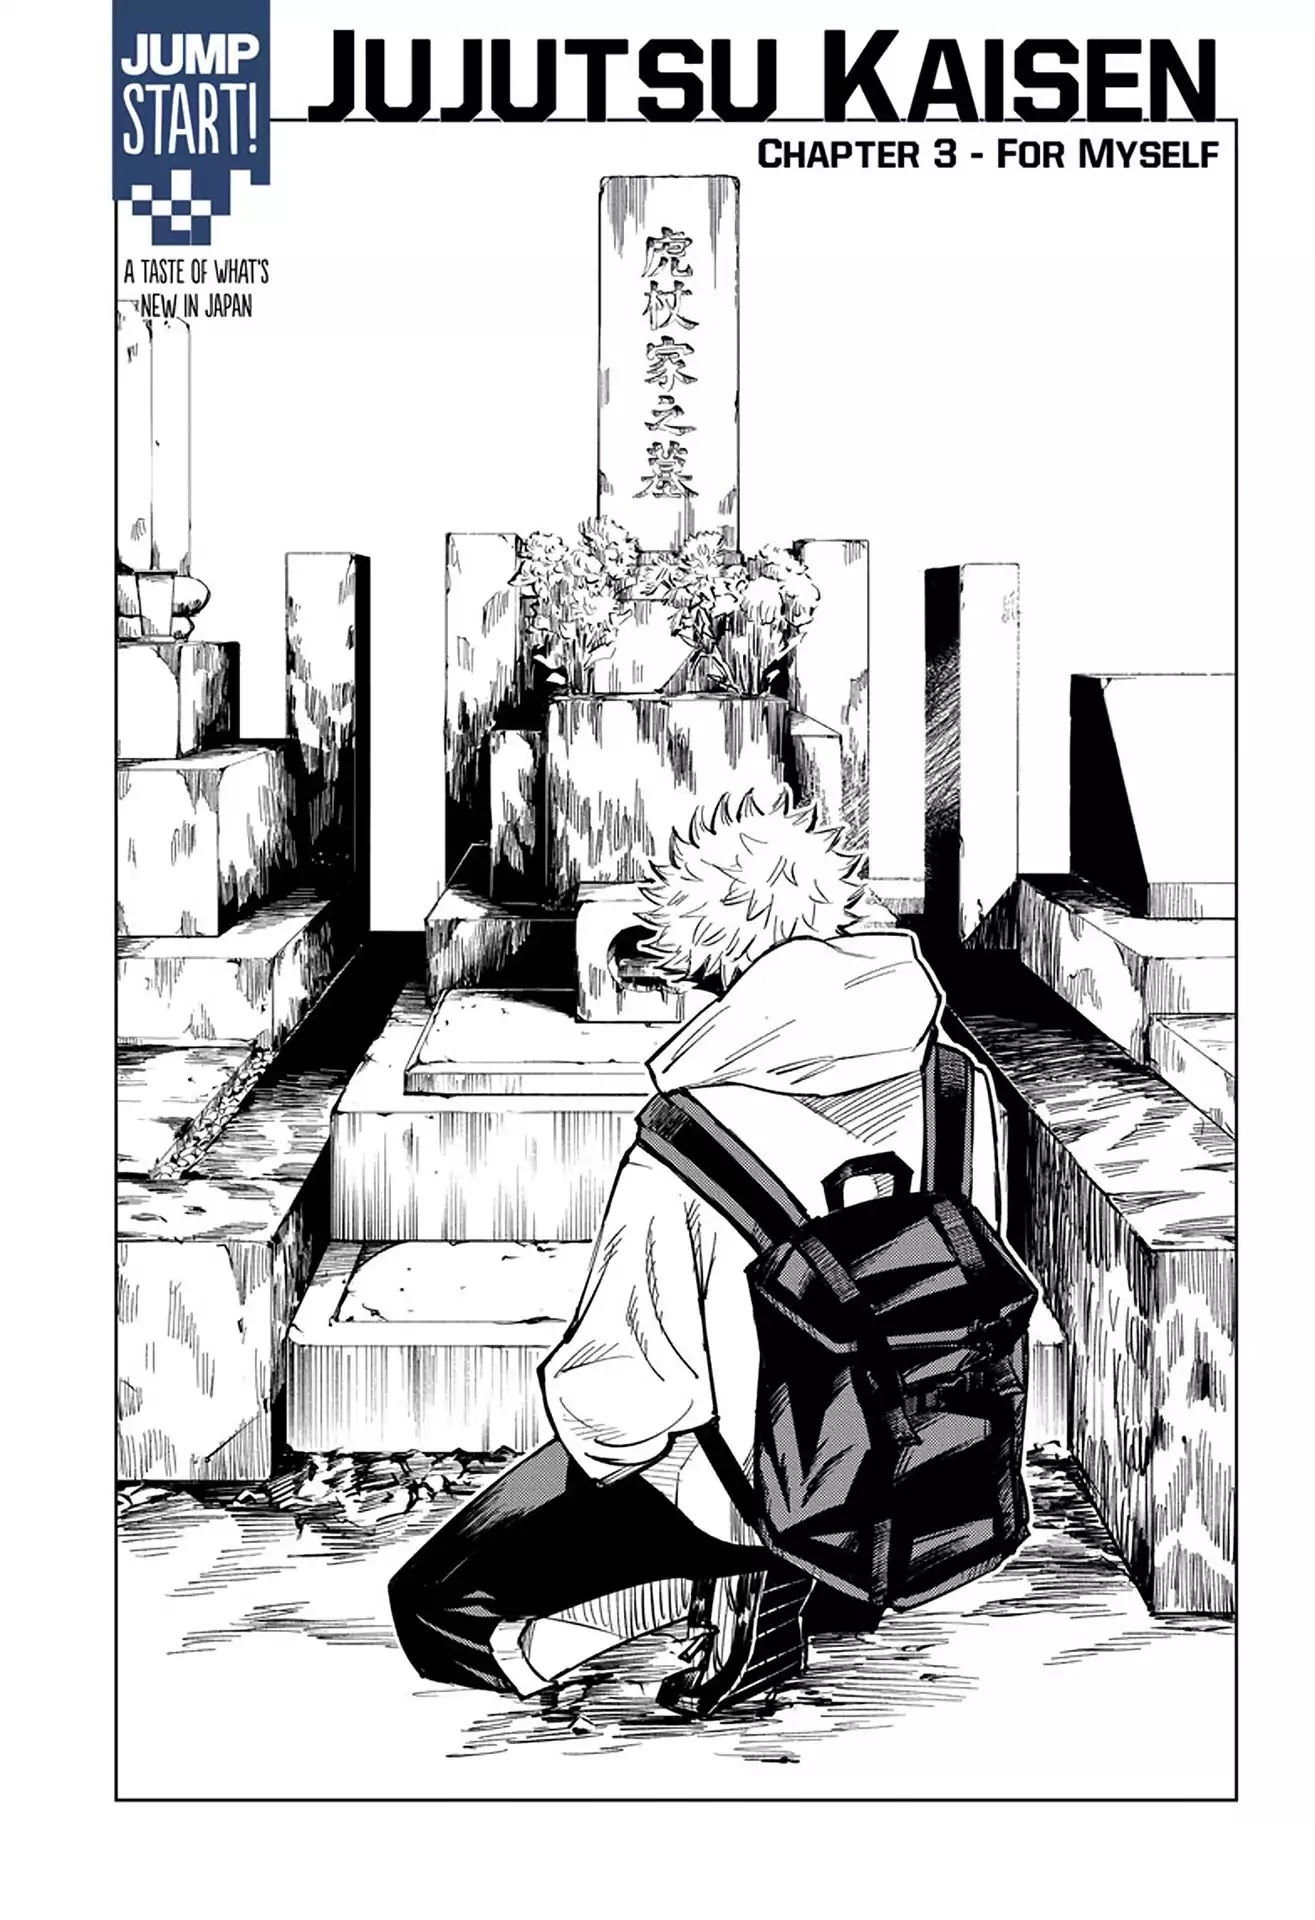 Jujutsu Kaisen, Chapter 3 For Myself image 02